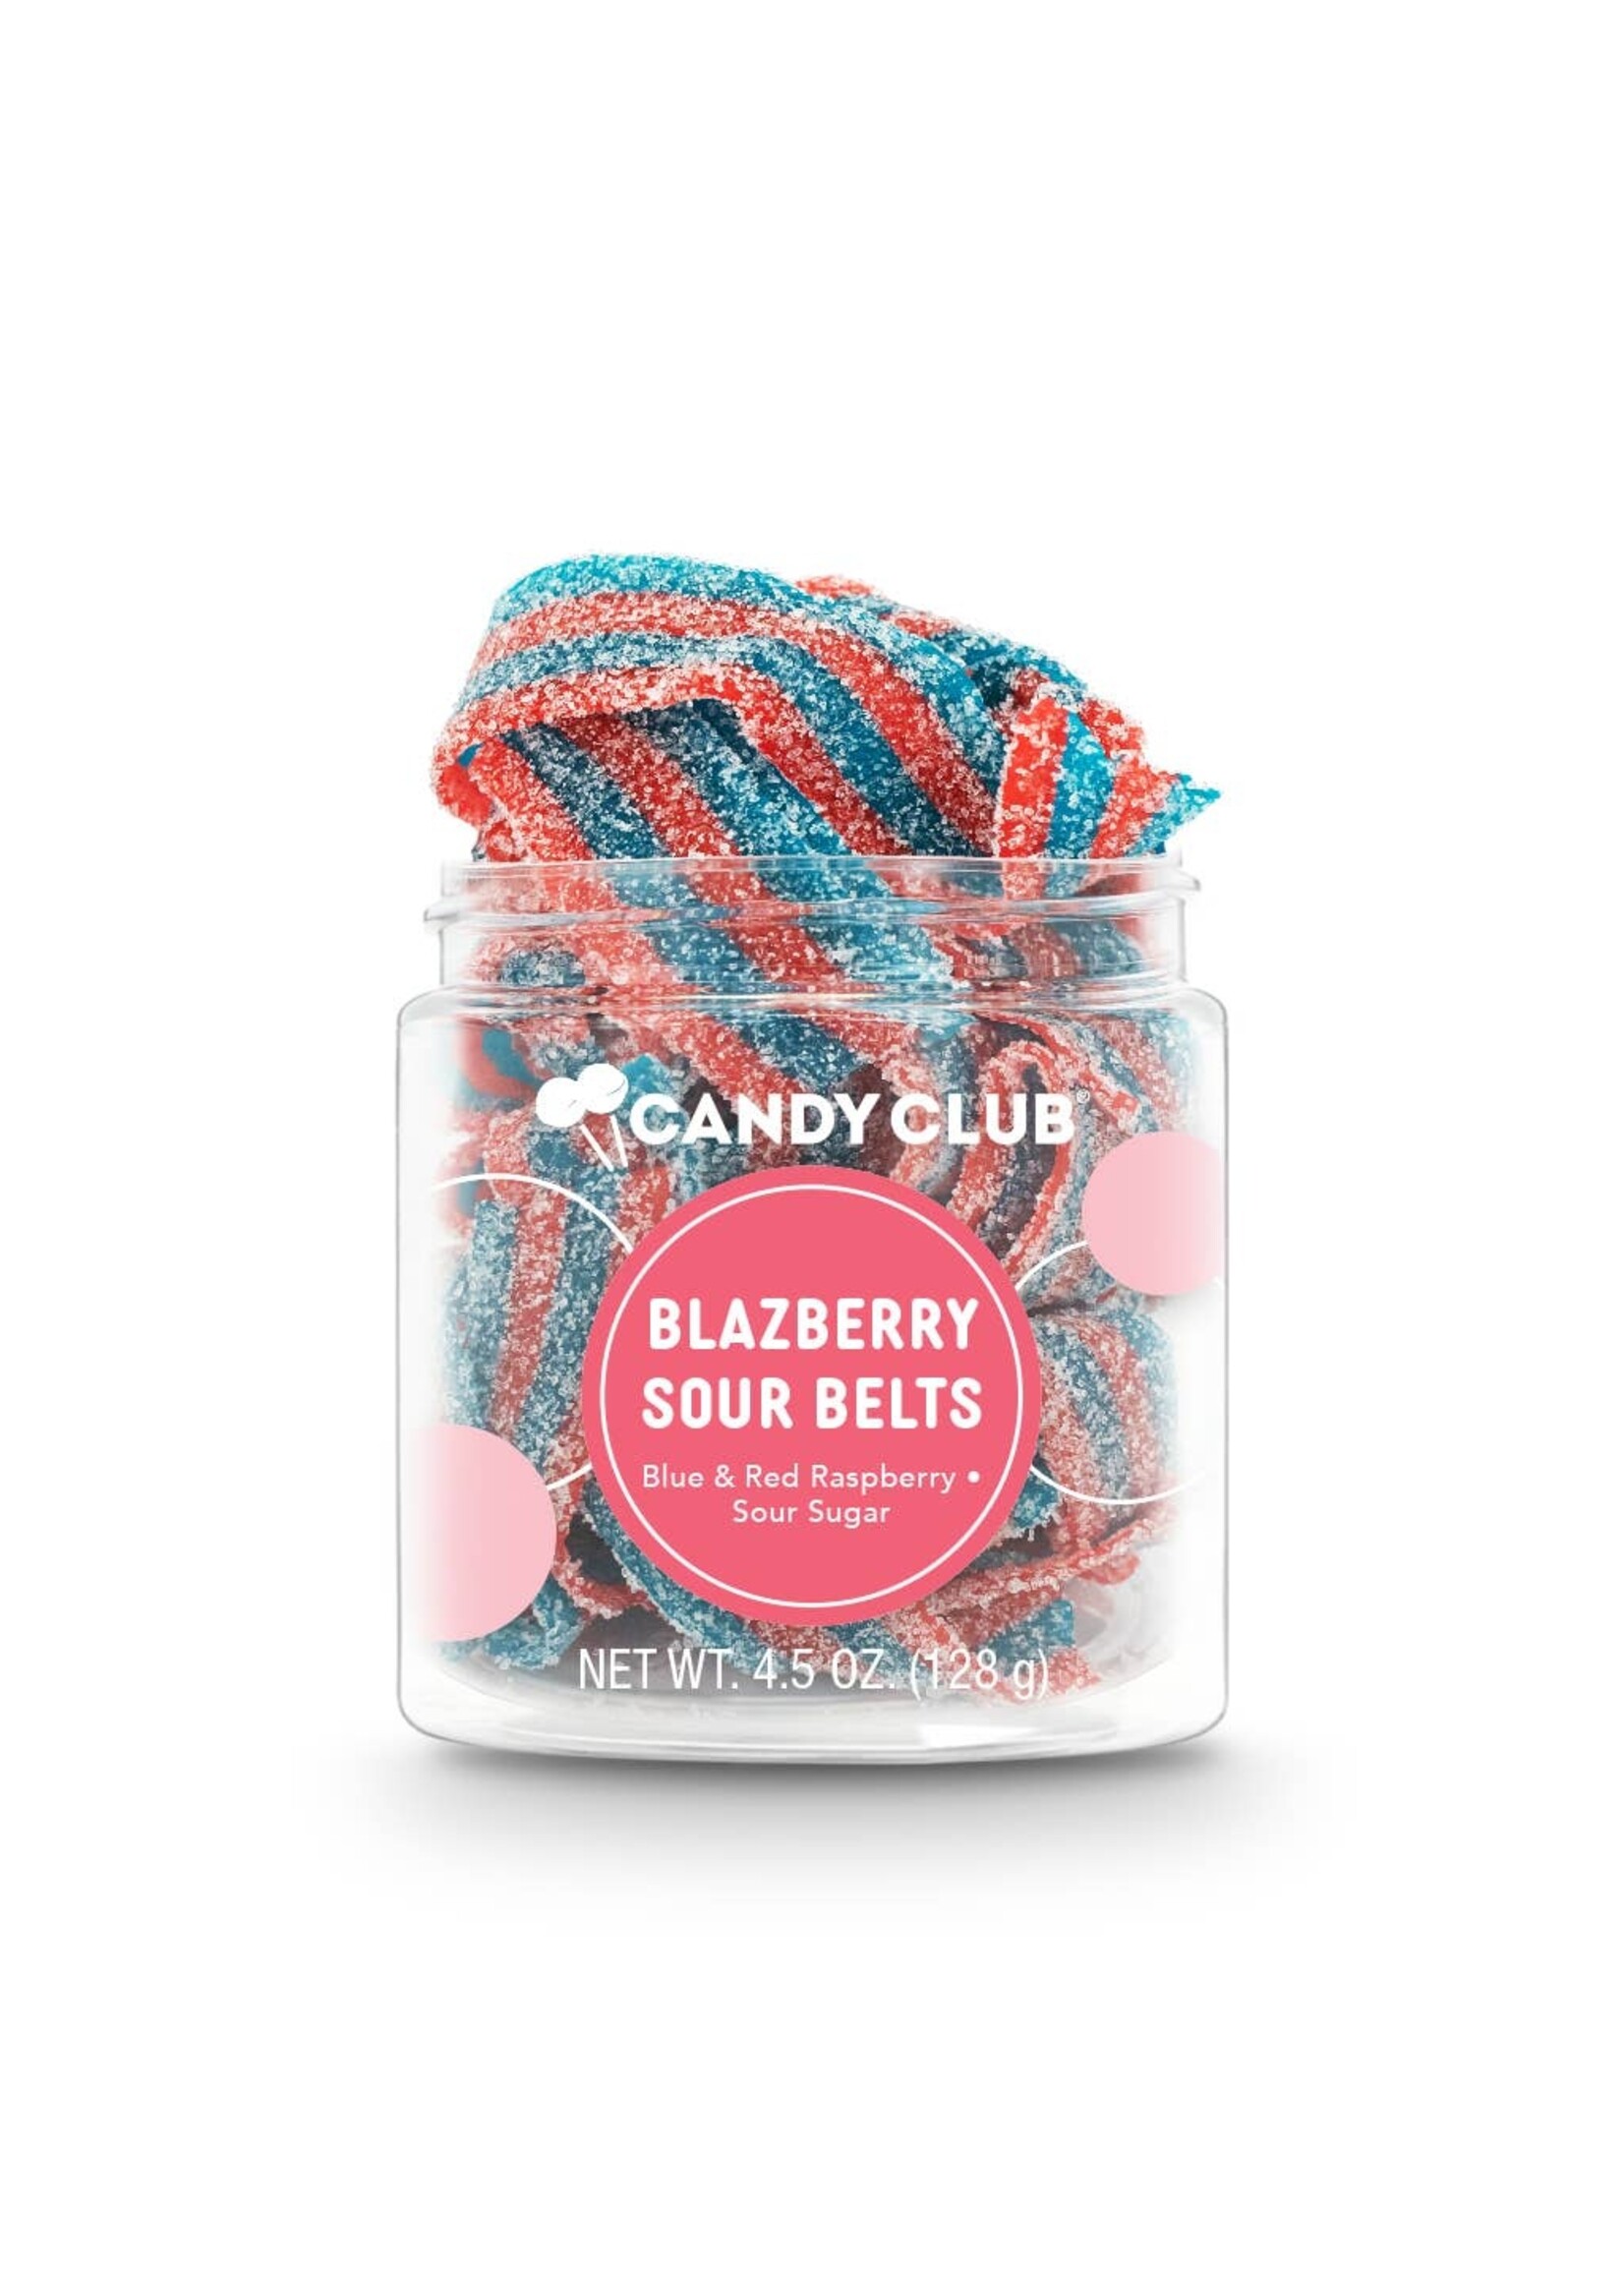 Candy Club Blazberry Sour Belts